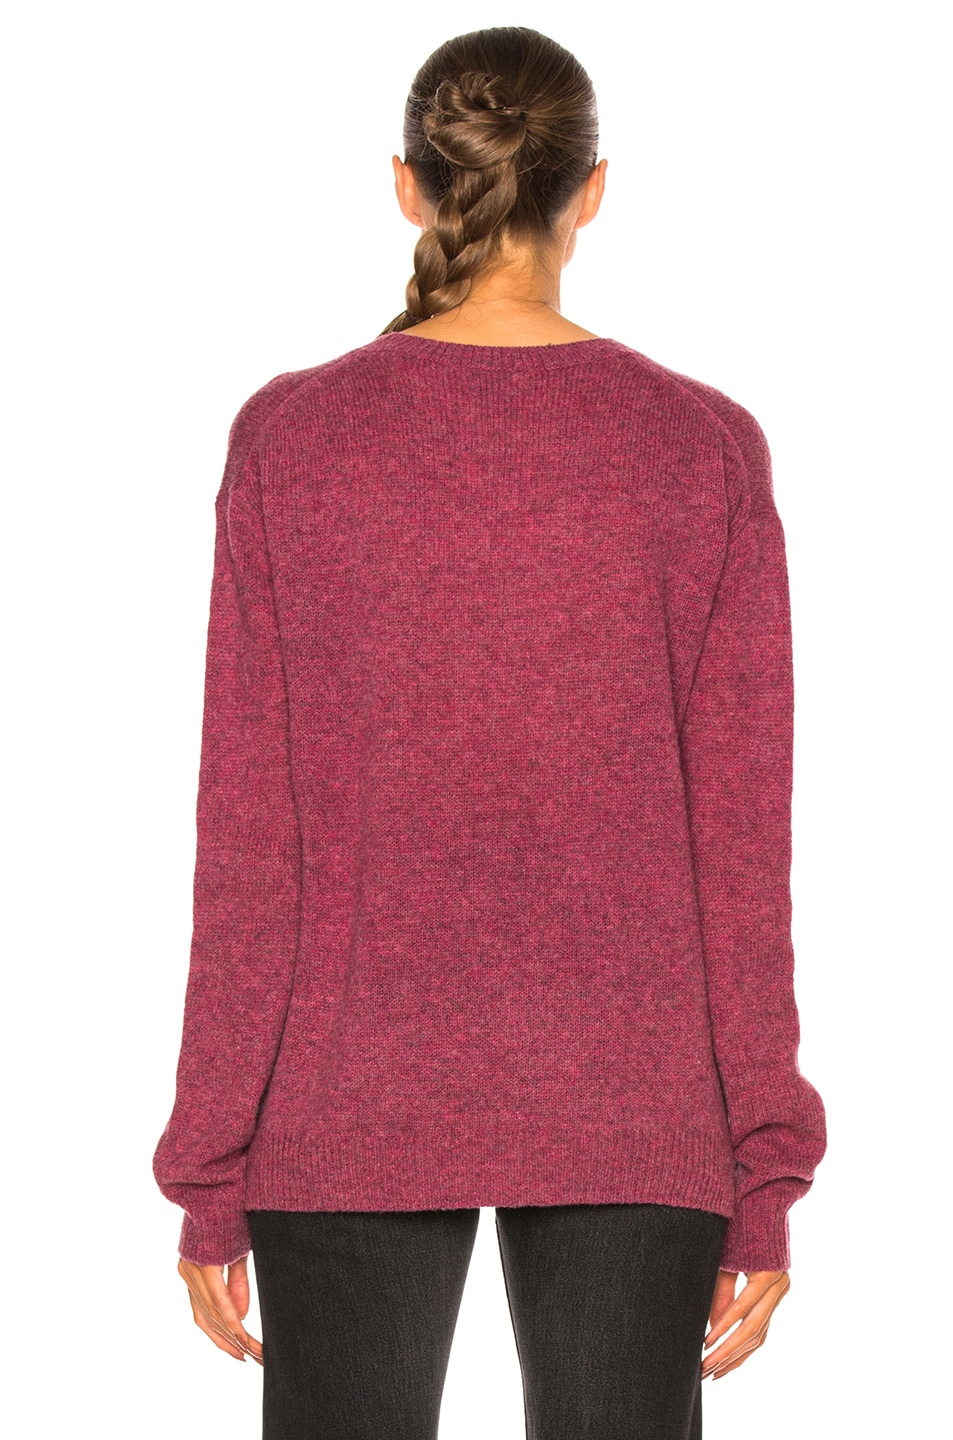 2 Stores In Stock: ACNE STUDIOS Deniz Wool Sweater, Pink Melange | ModeSens